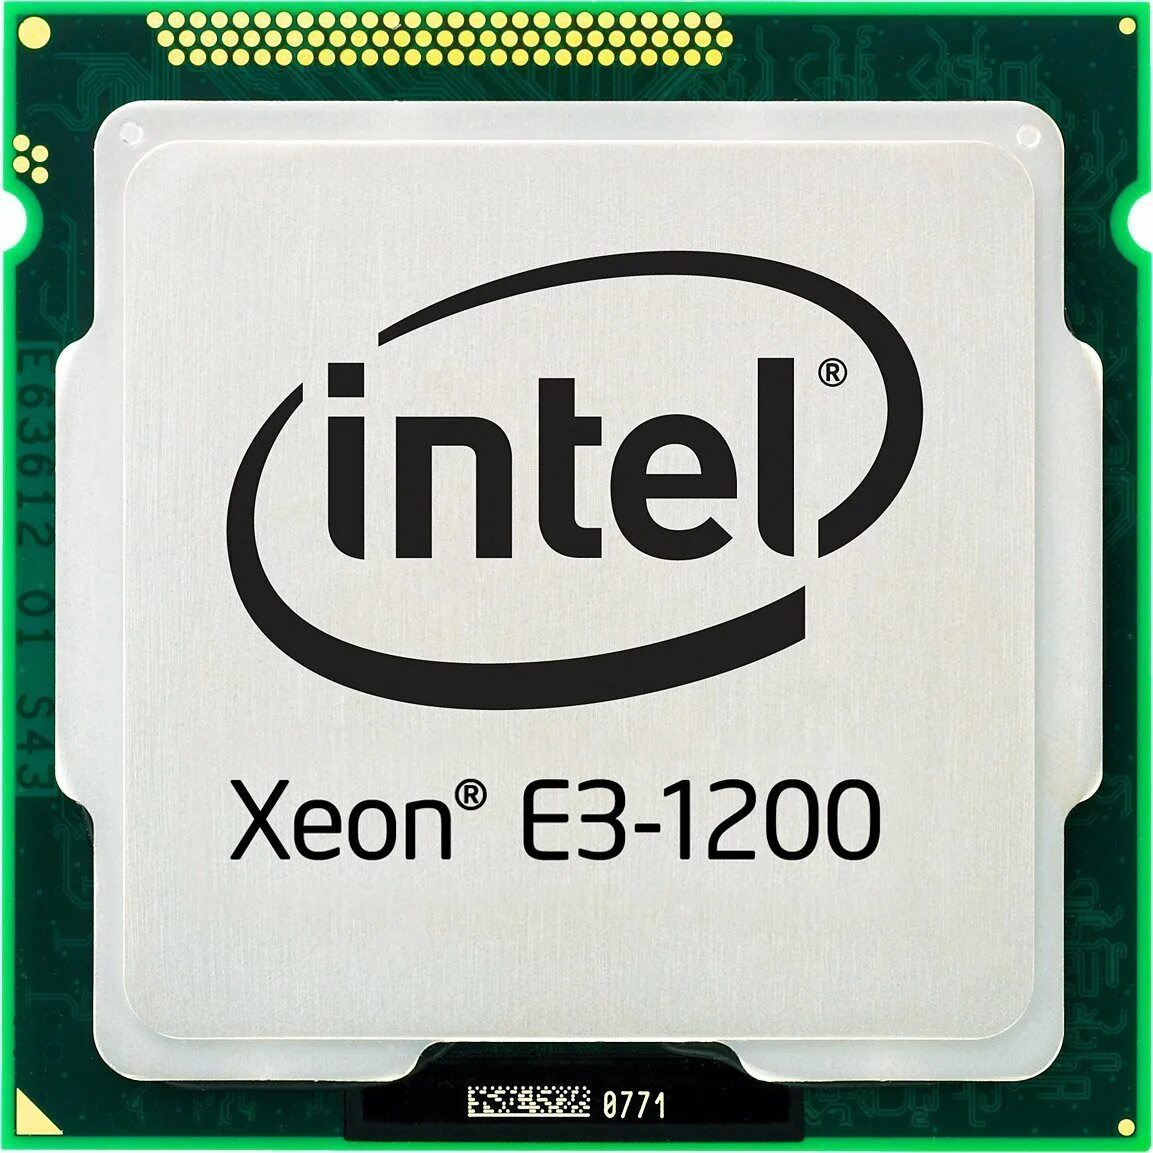 Lga интел. Процессор Intel Core i5-12400f lga1700, 6 x 2500 МГЦ, OEM. Процессор Intel Core i5-12400f OEM. Процессор Intel Core i5 12400f, LGA 1700, OEM. Процессор Intel Core i5 12600.